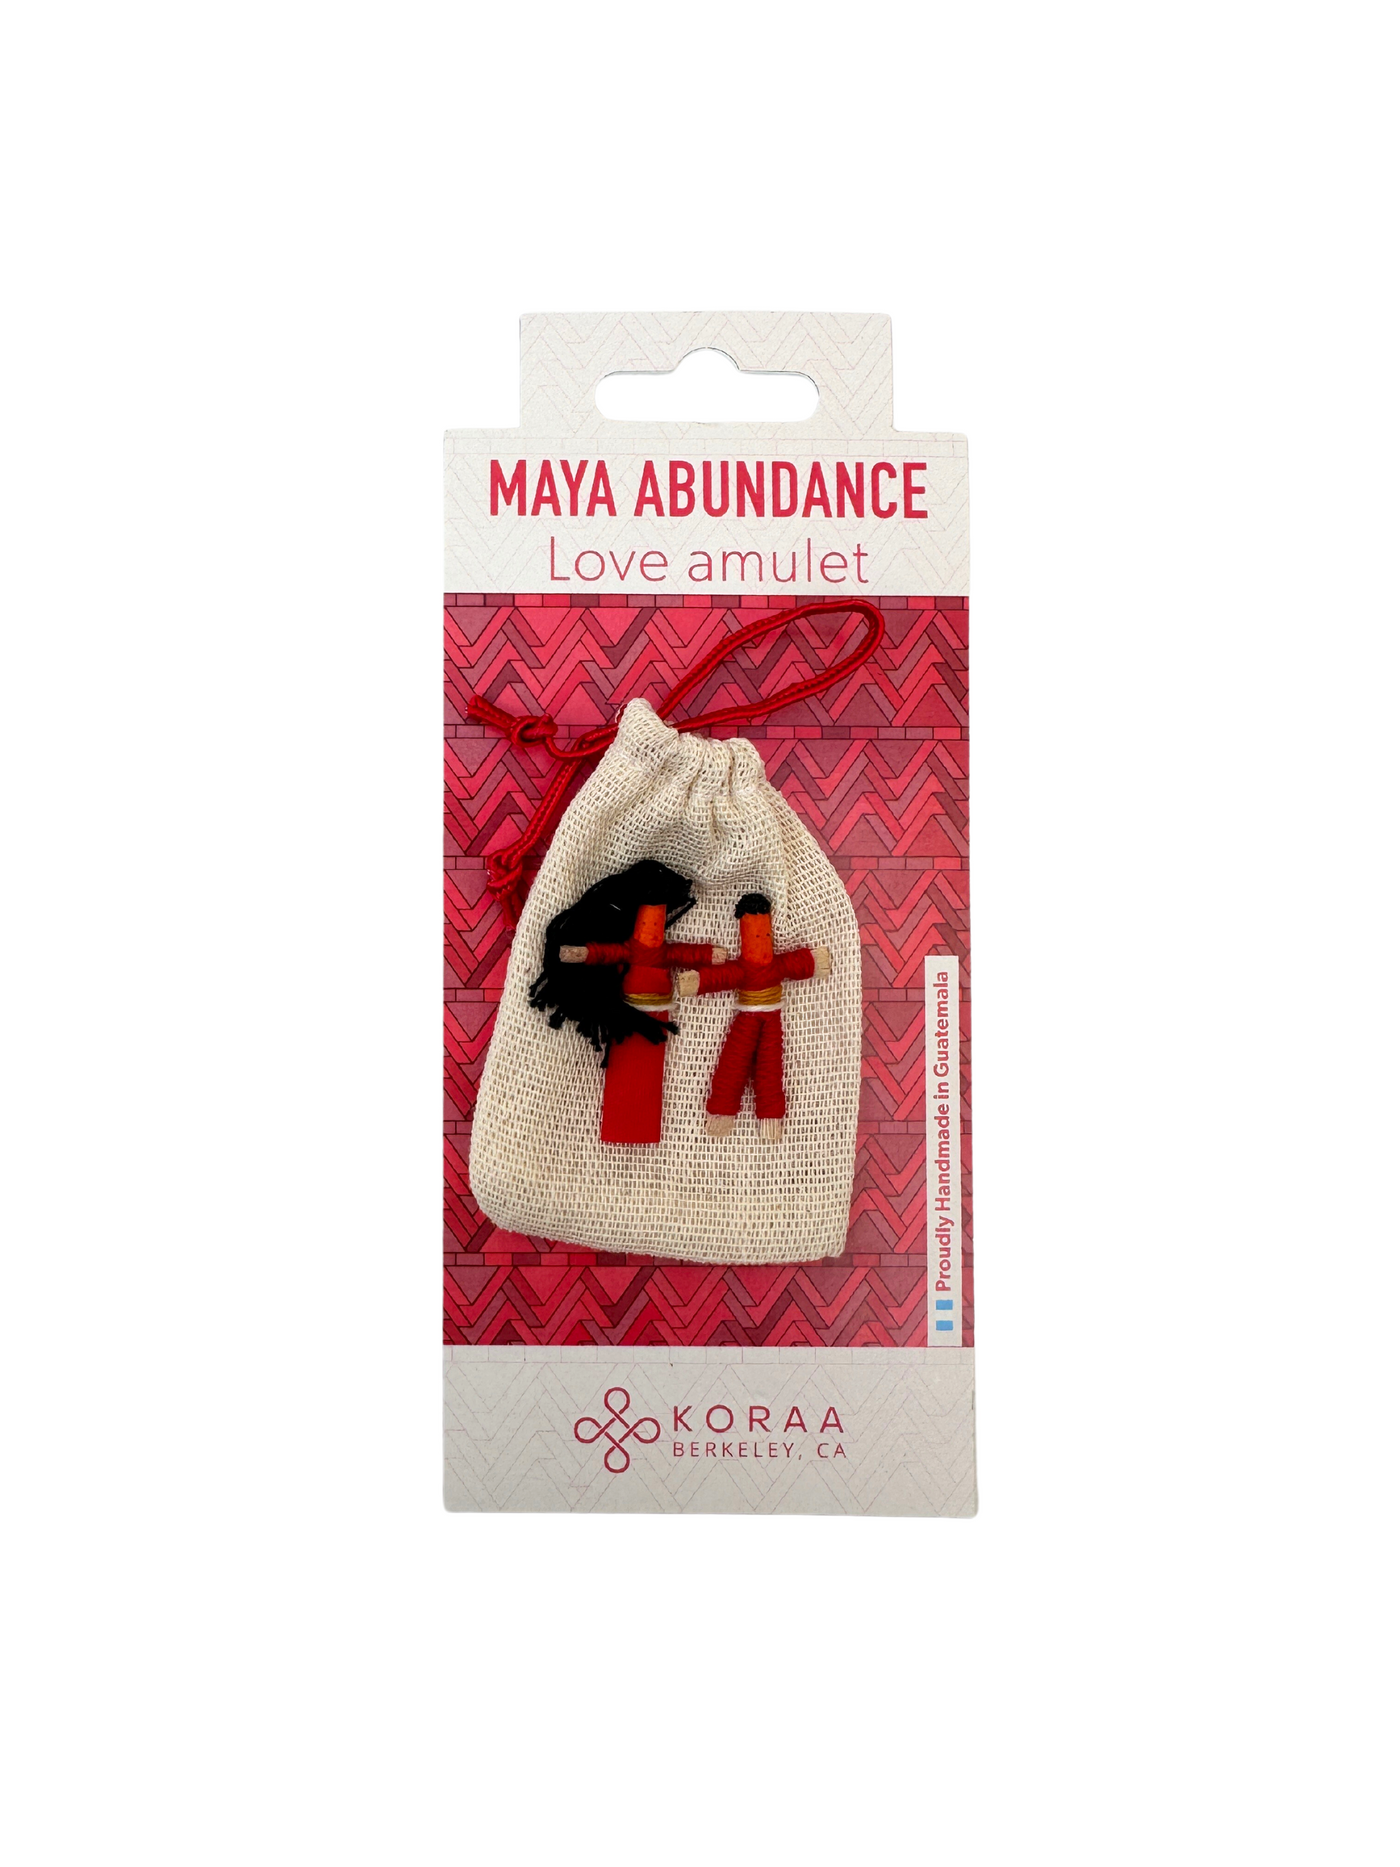 Mayan Abundance Amulet